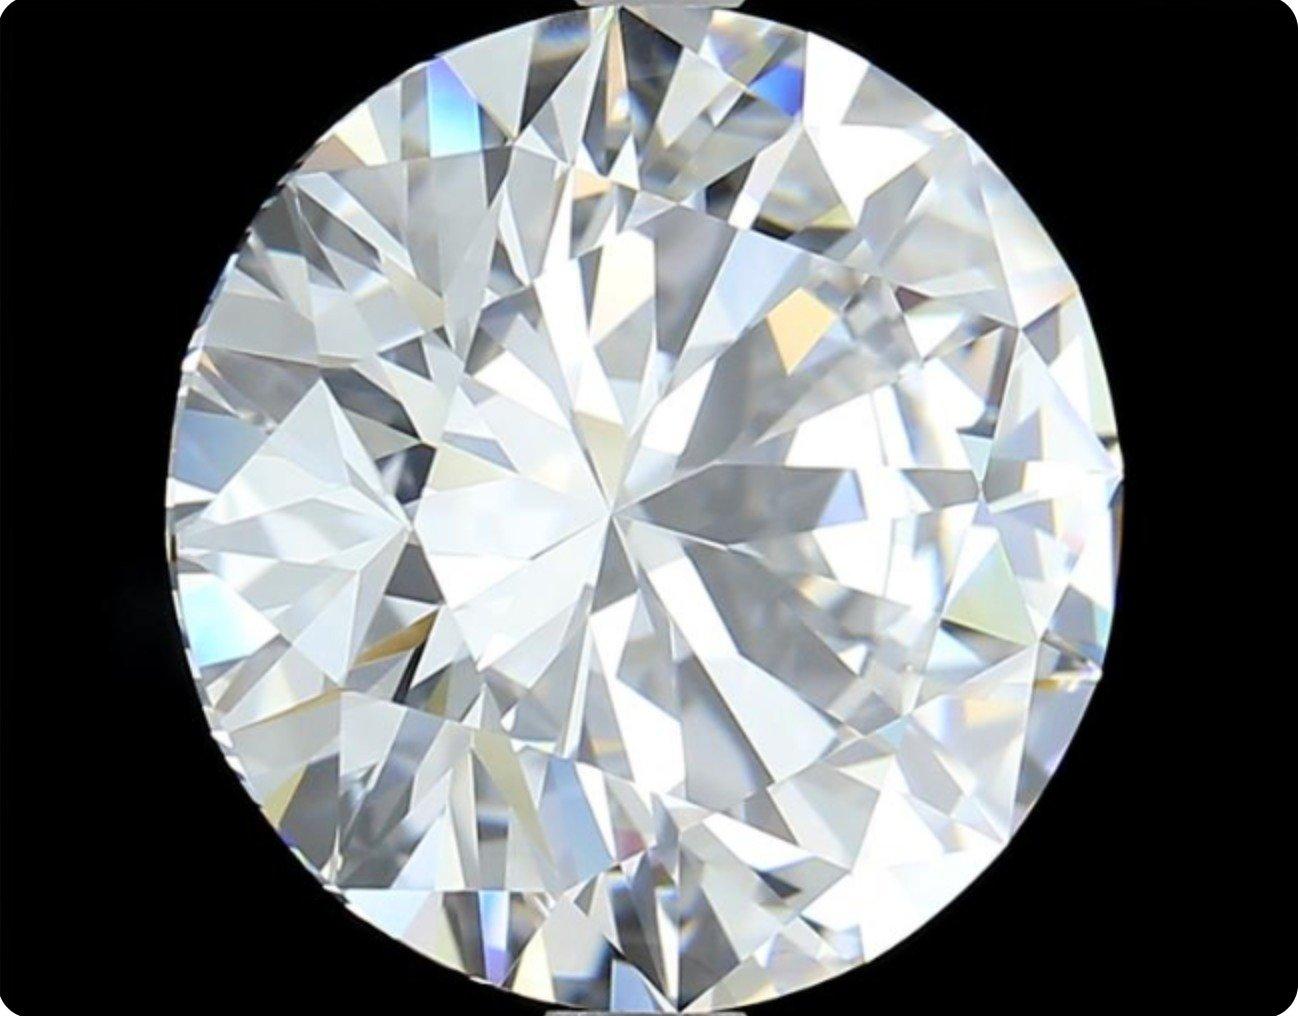 2 Pcs Natural Diamonds, 0.80 Ct, Round, F, G, VS2, GIA Certificate 2